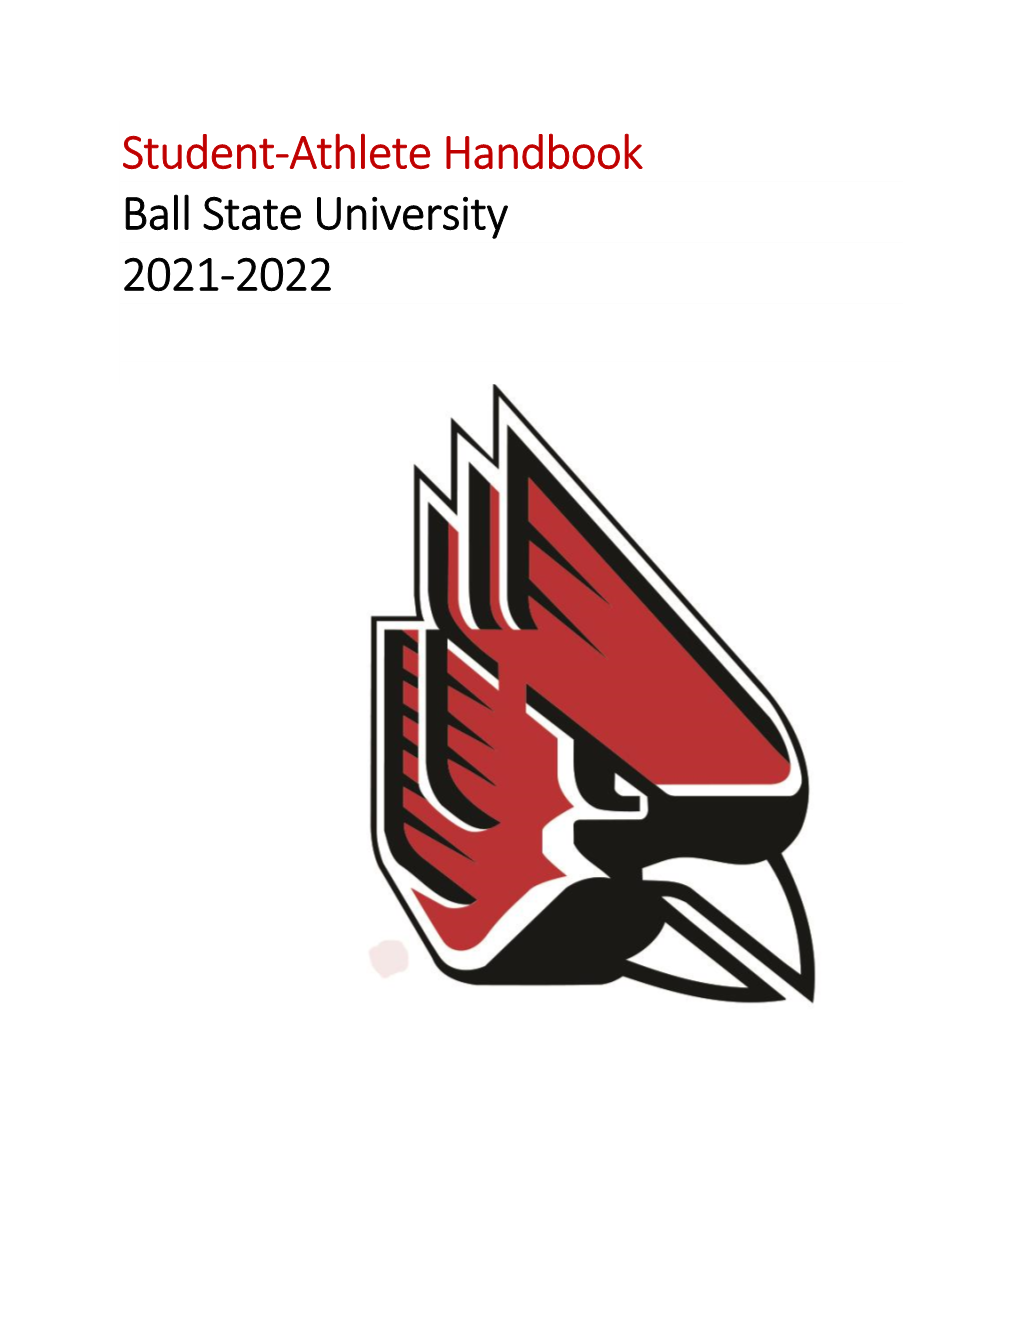 Student-Athlete Handbook Ball State University 2019-20